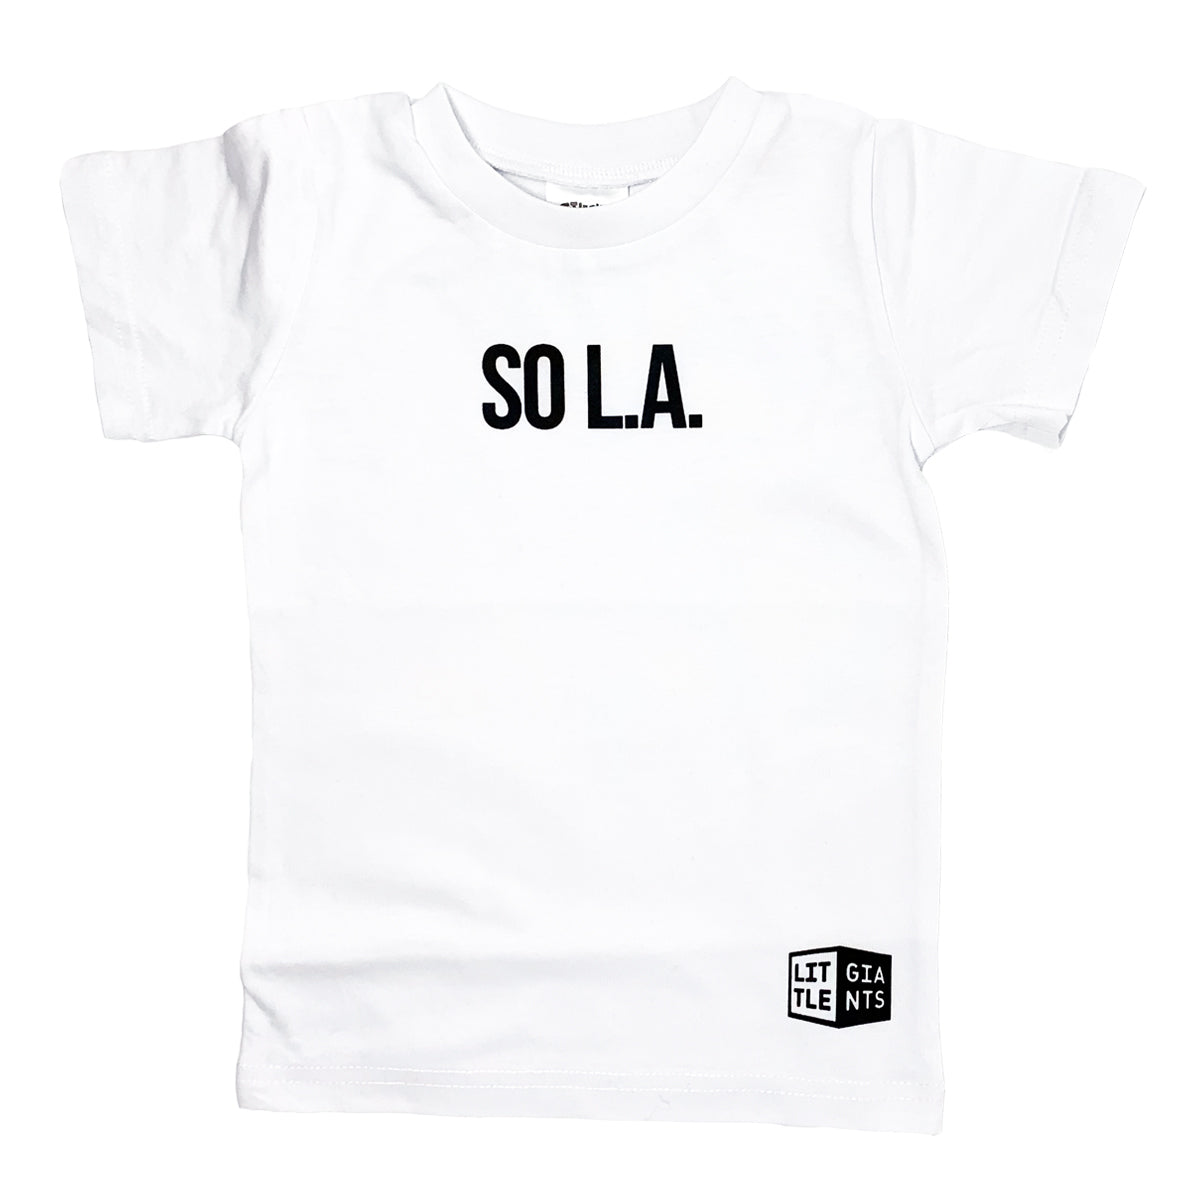 So L.A. T-Shirt (White)